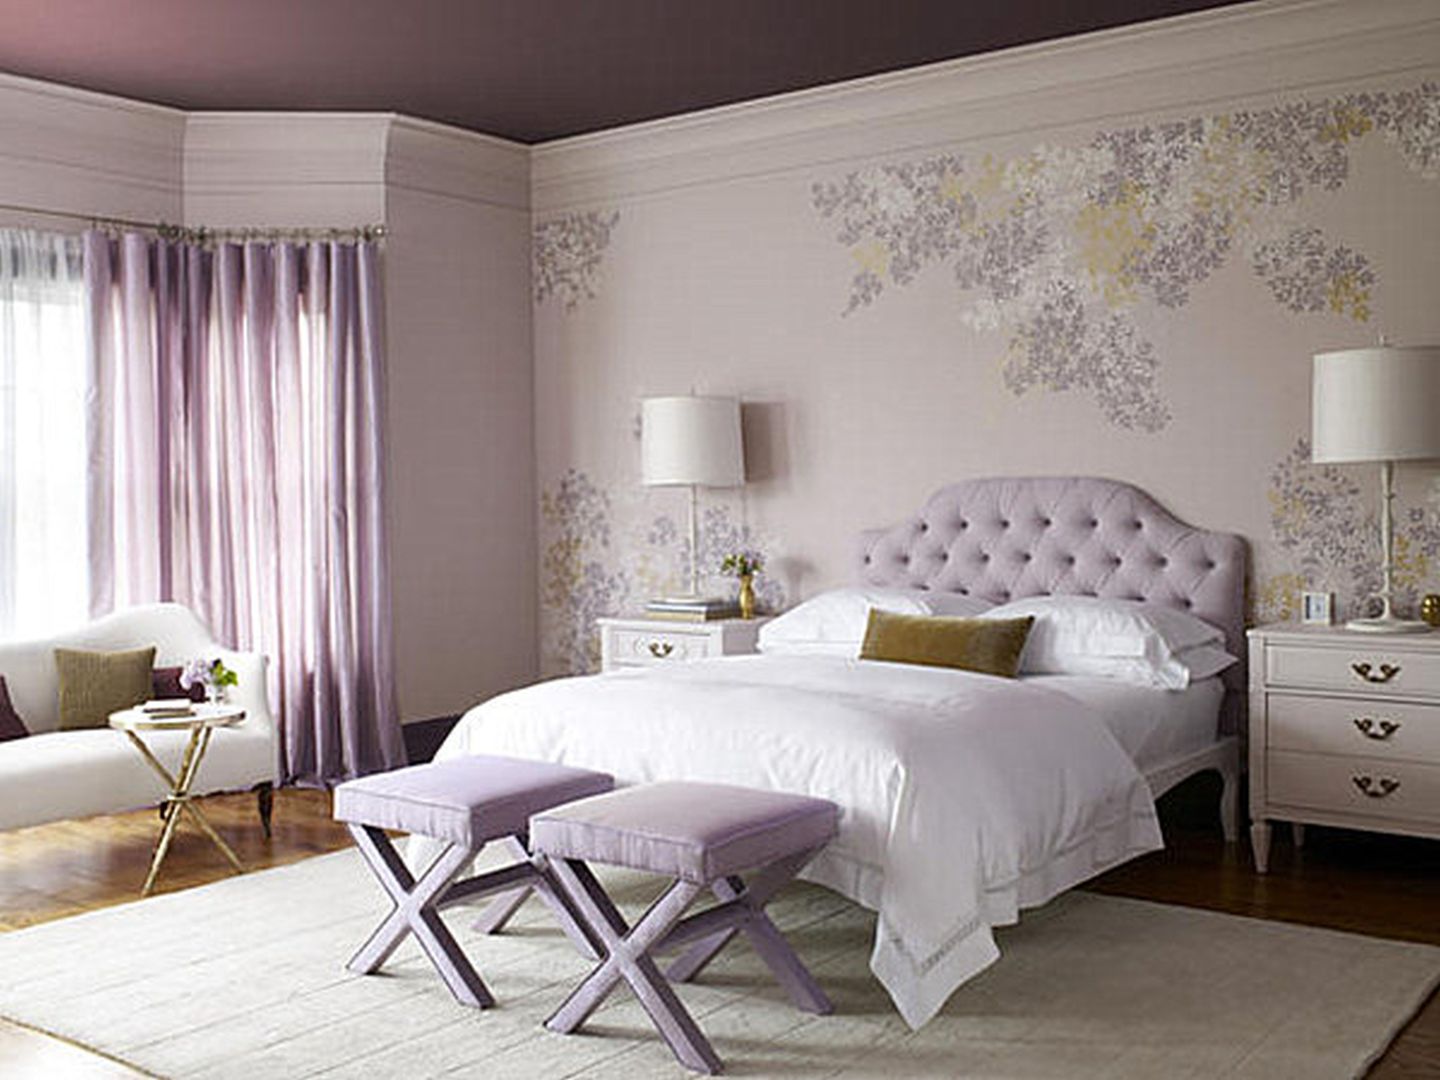 Kamar tidur modern minimalis tema pastel memberi kesan tenang.